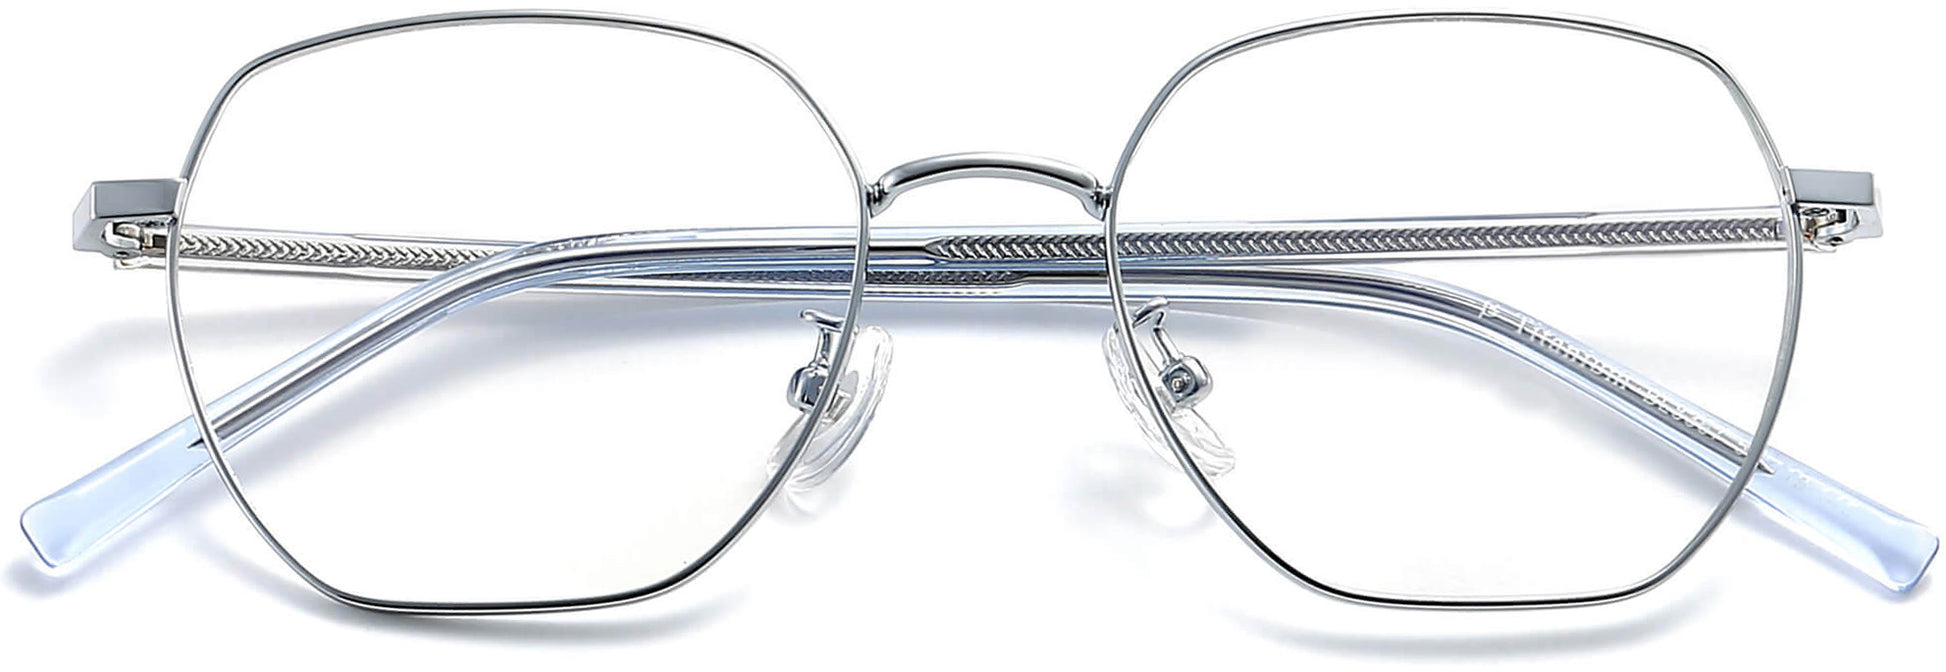 Pavone Geometric Silver Eyeglasses from ANRRI, closed view